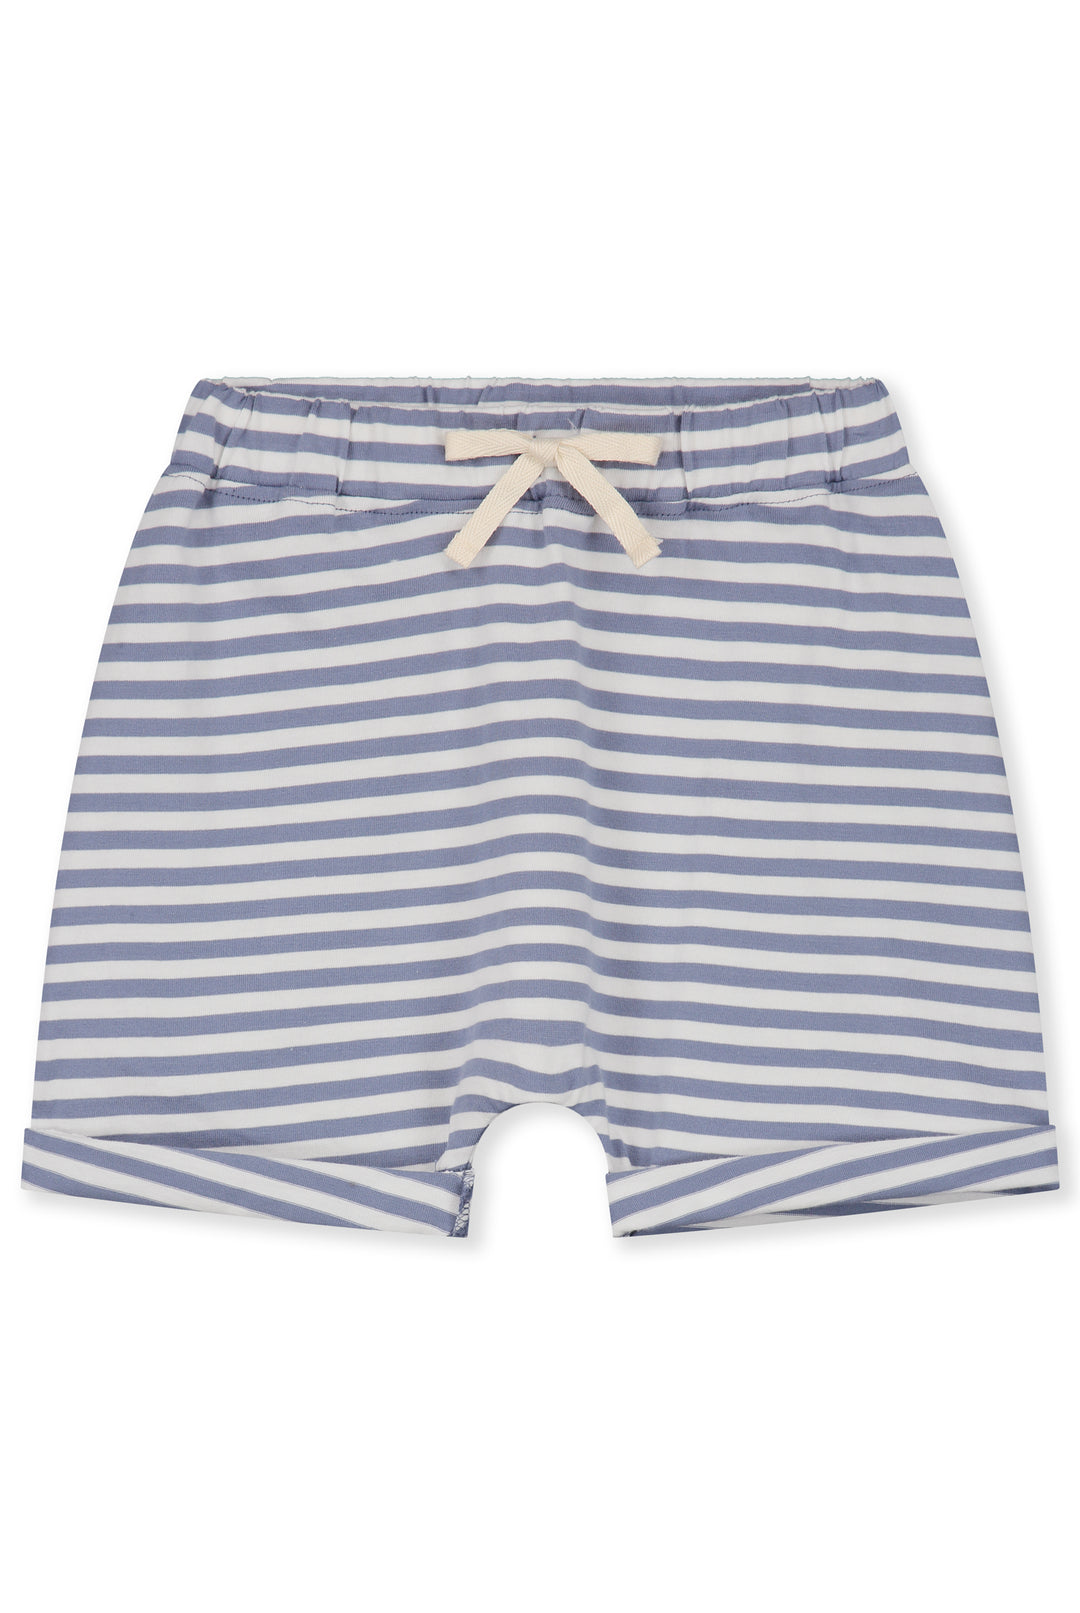 Gray Label Shorts, Lavender/Off White